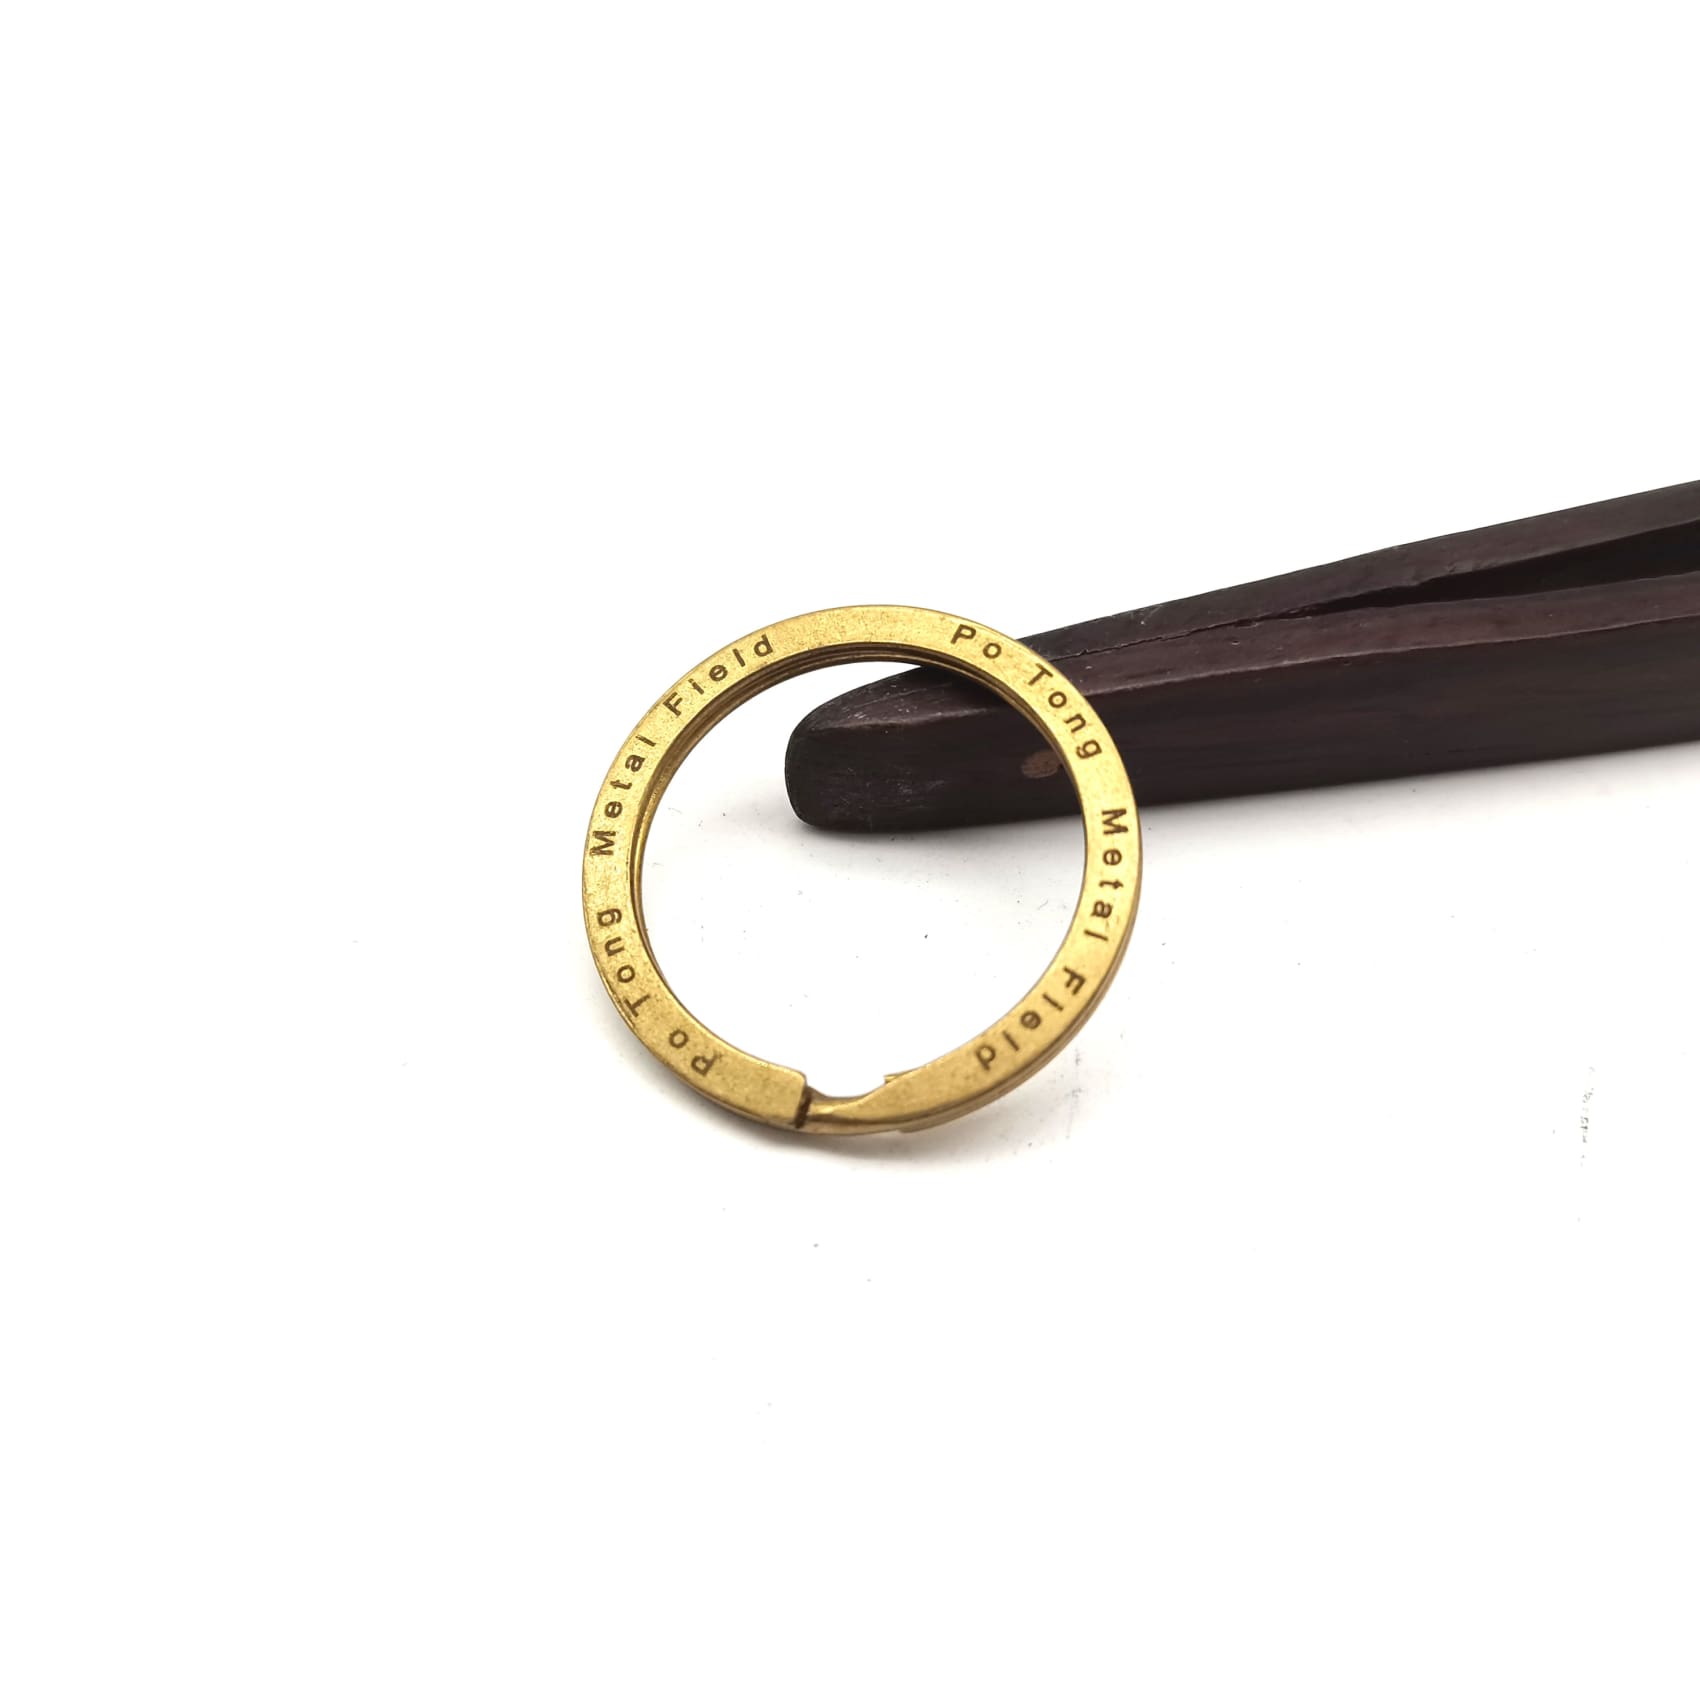 Solid 925 Sterling Silver Split Ring Key Ring, Round Flat Key Chain Rings  Metal Split Ring for Home Keys Organization